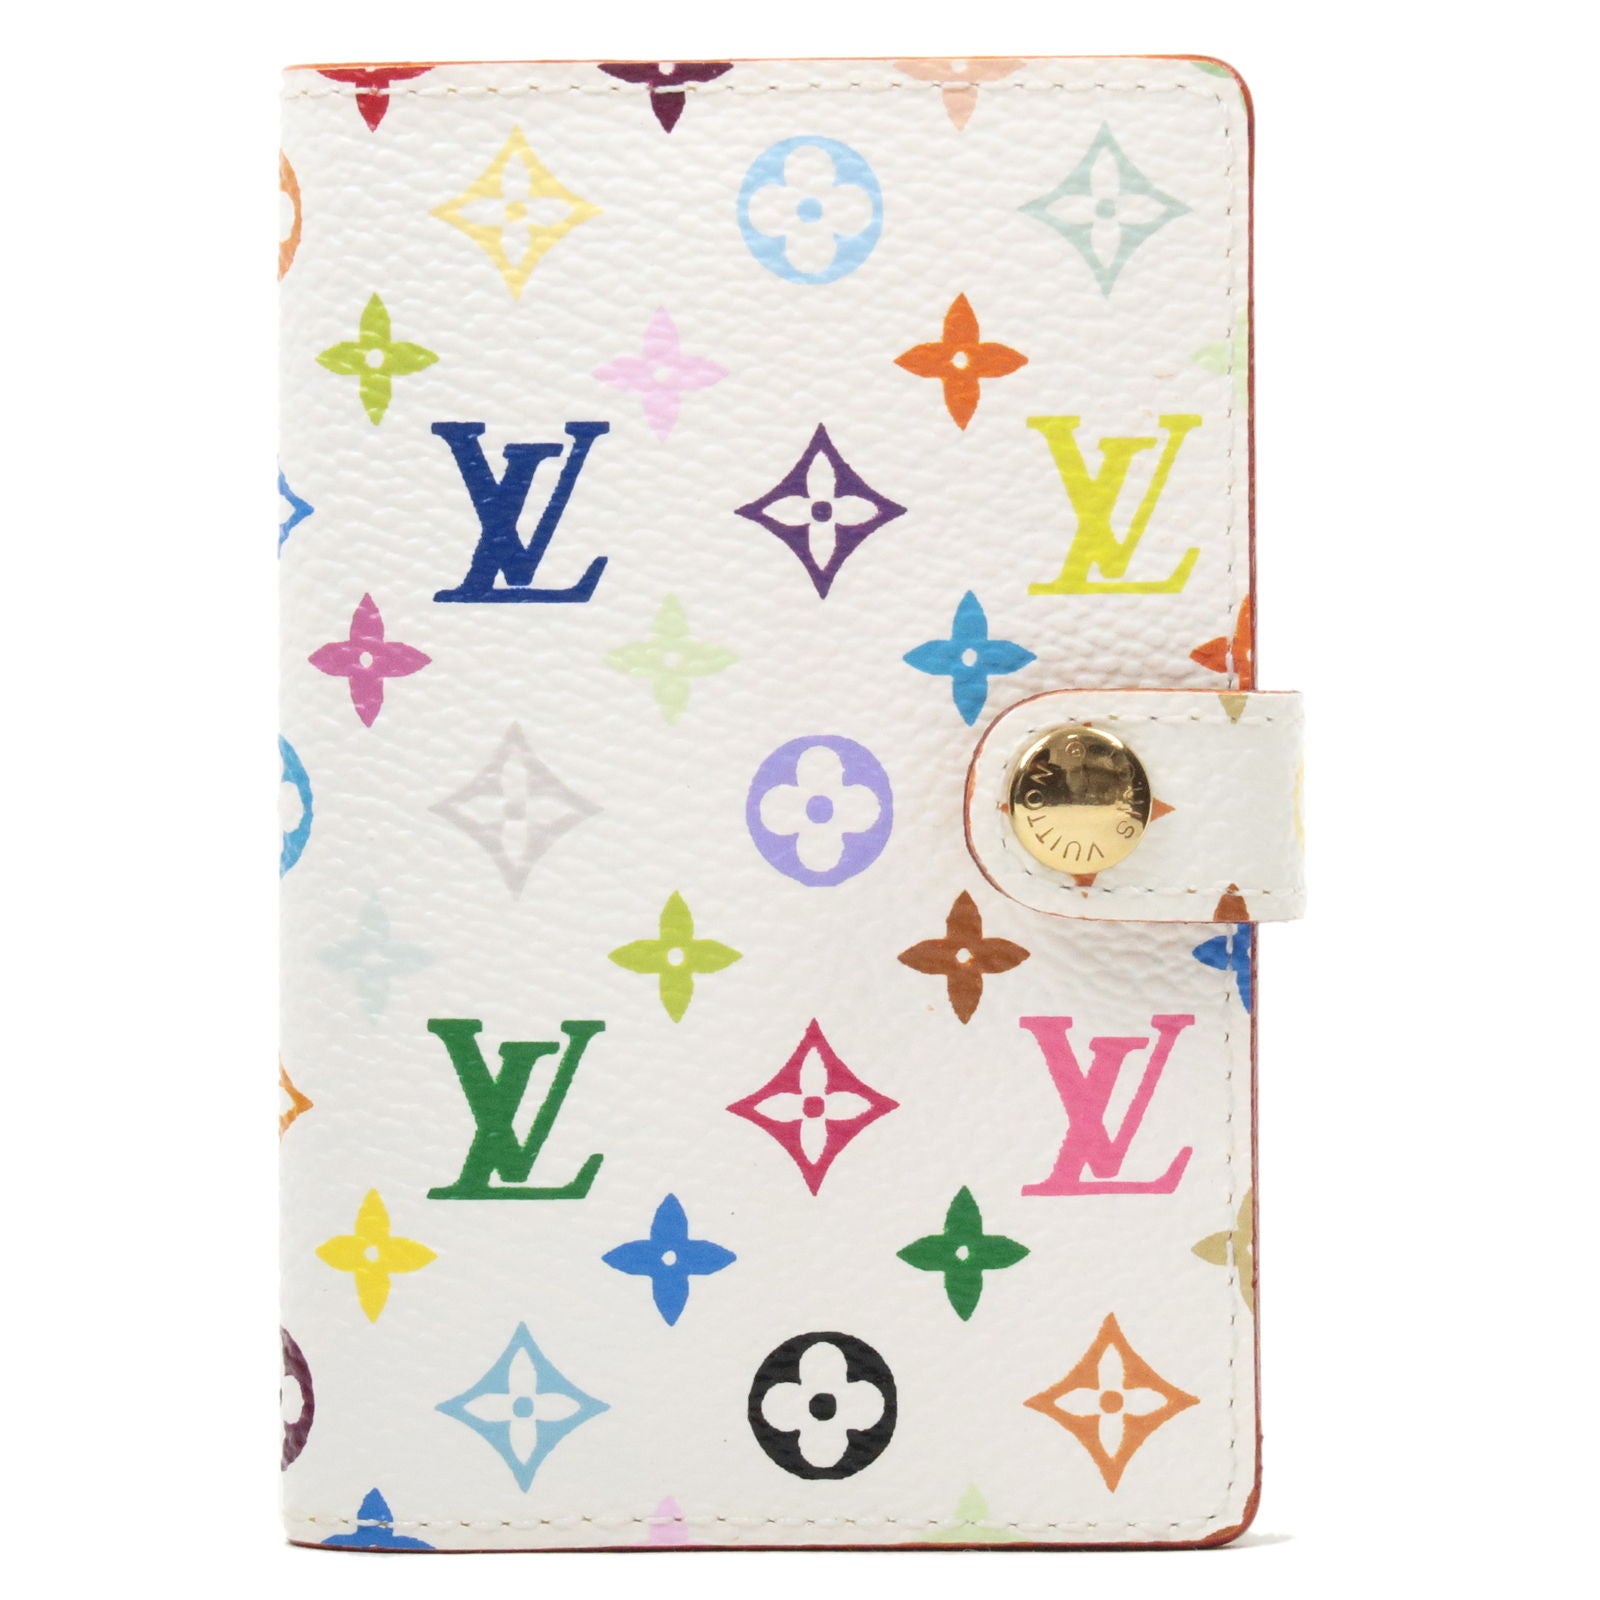  Louis Vuitton Monogram Mini Agenda Card Holder